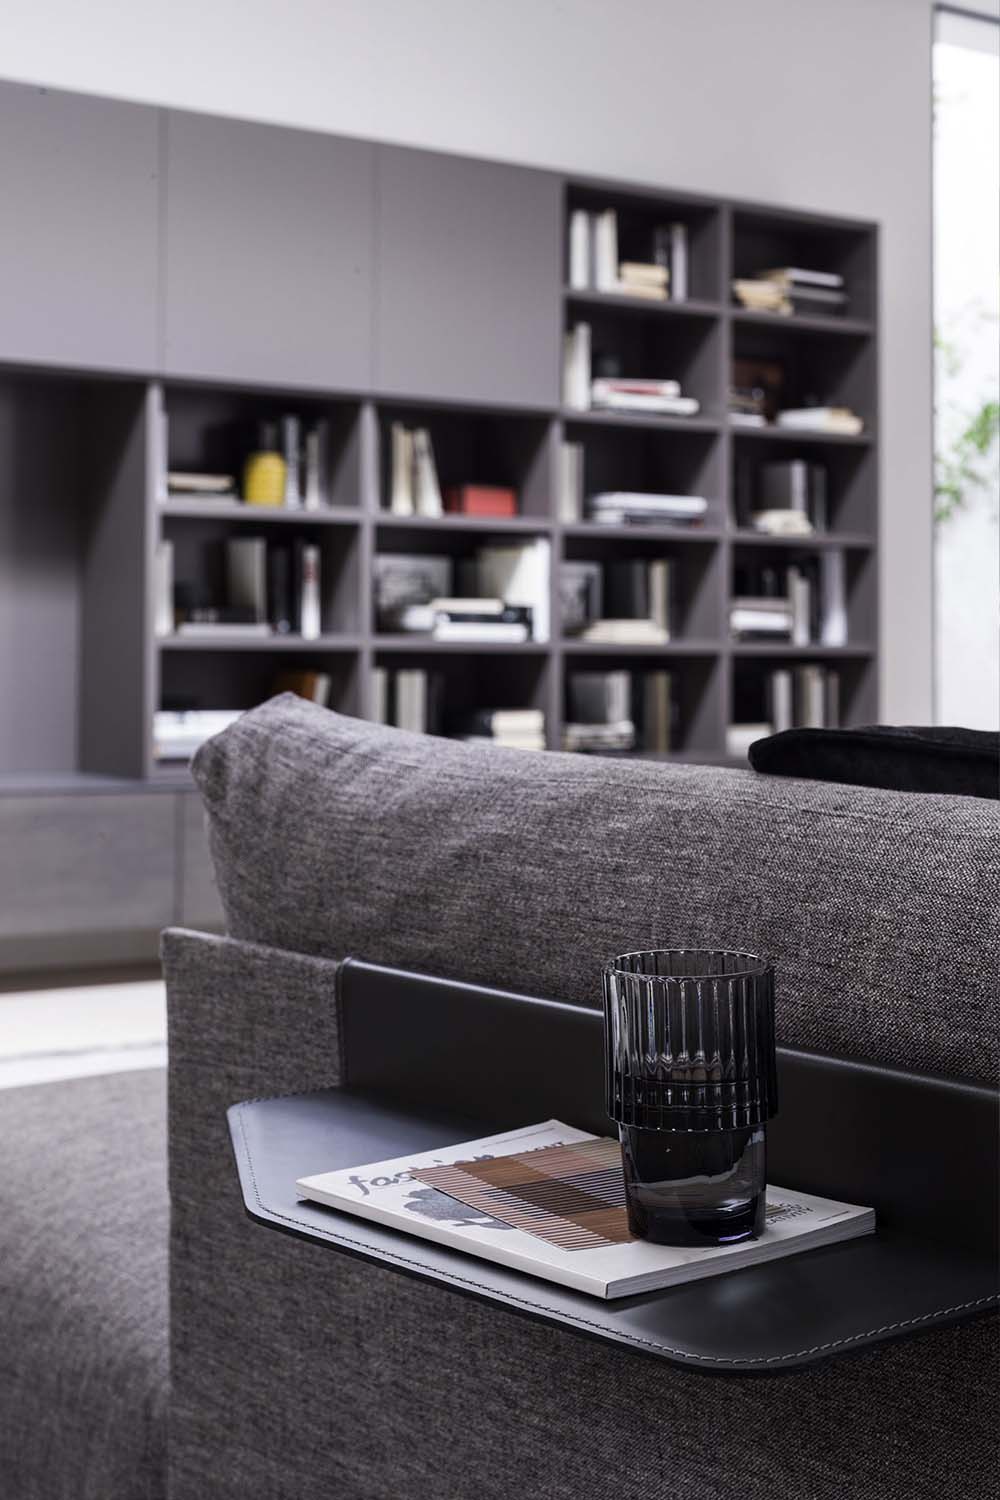 Kubi luxury Italian modern sofa by Novamobili. Sold by Krieder UK.